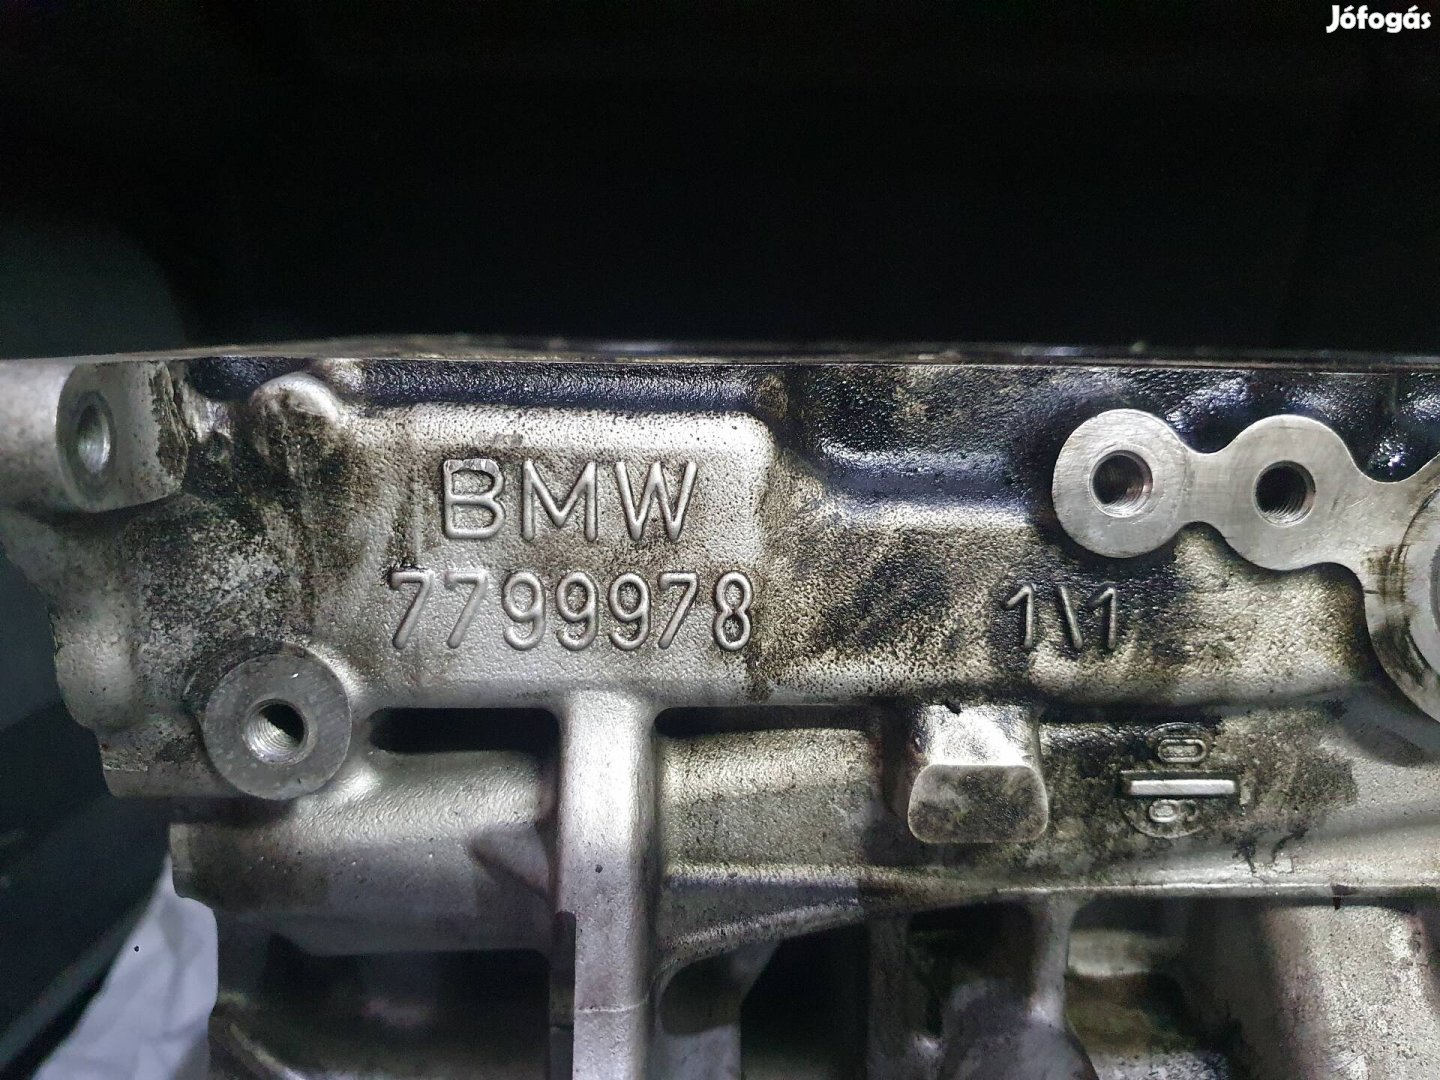 BMW 40D Motor blokk.